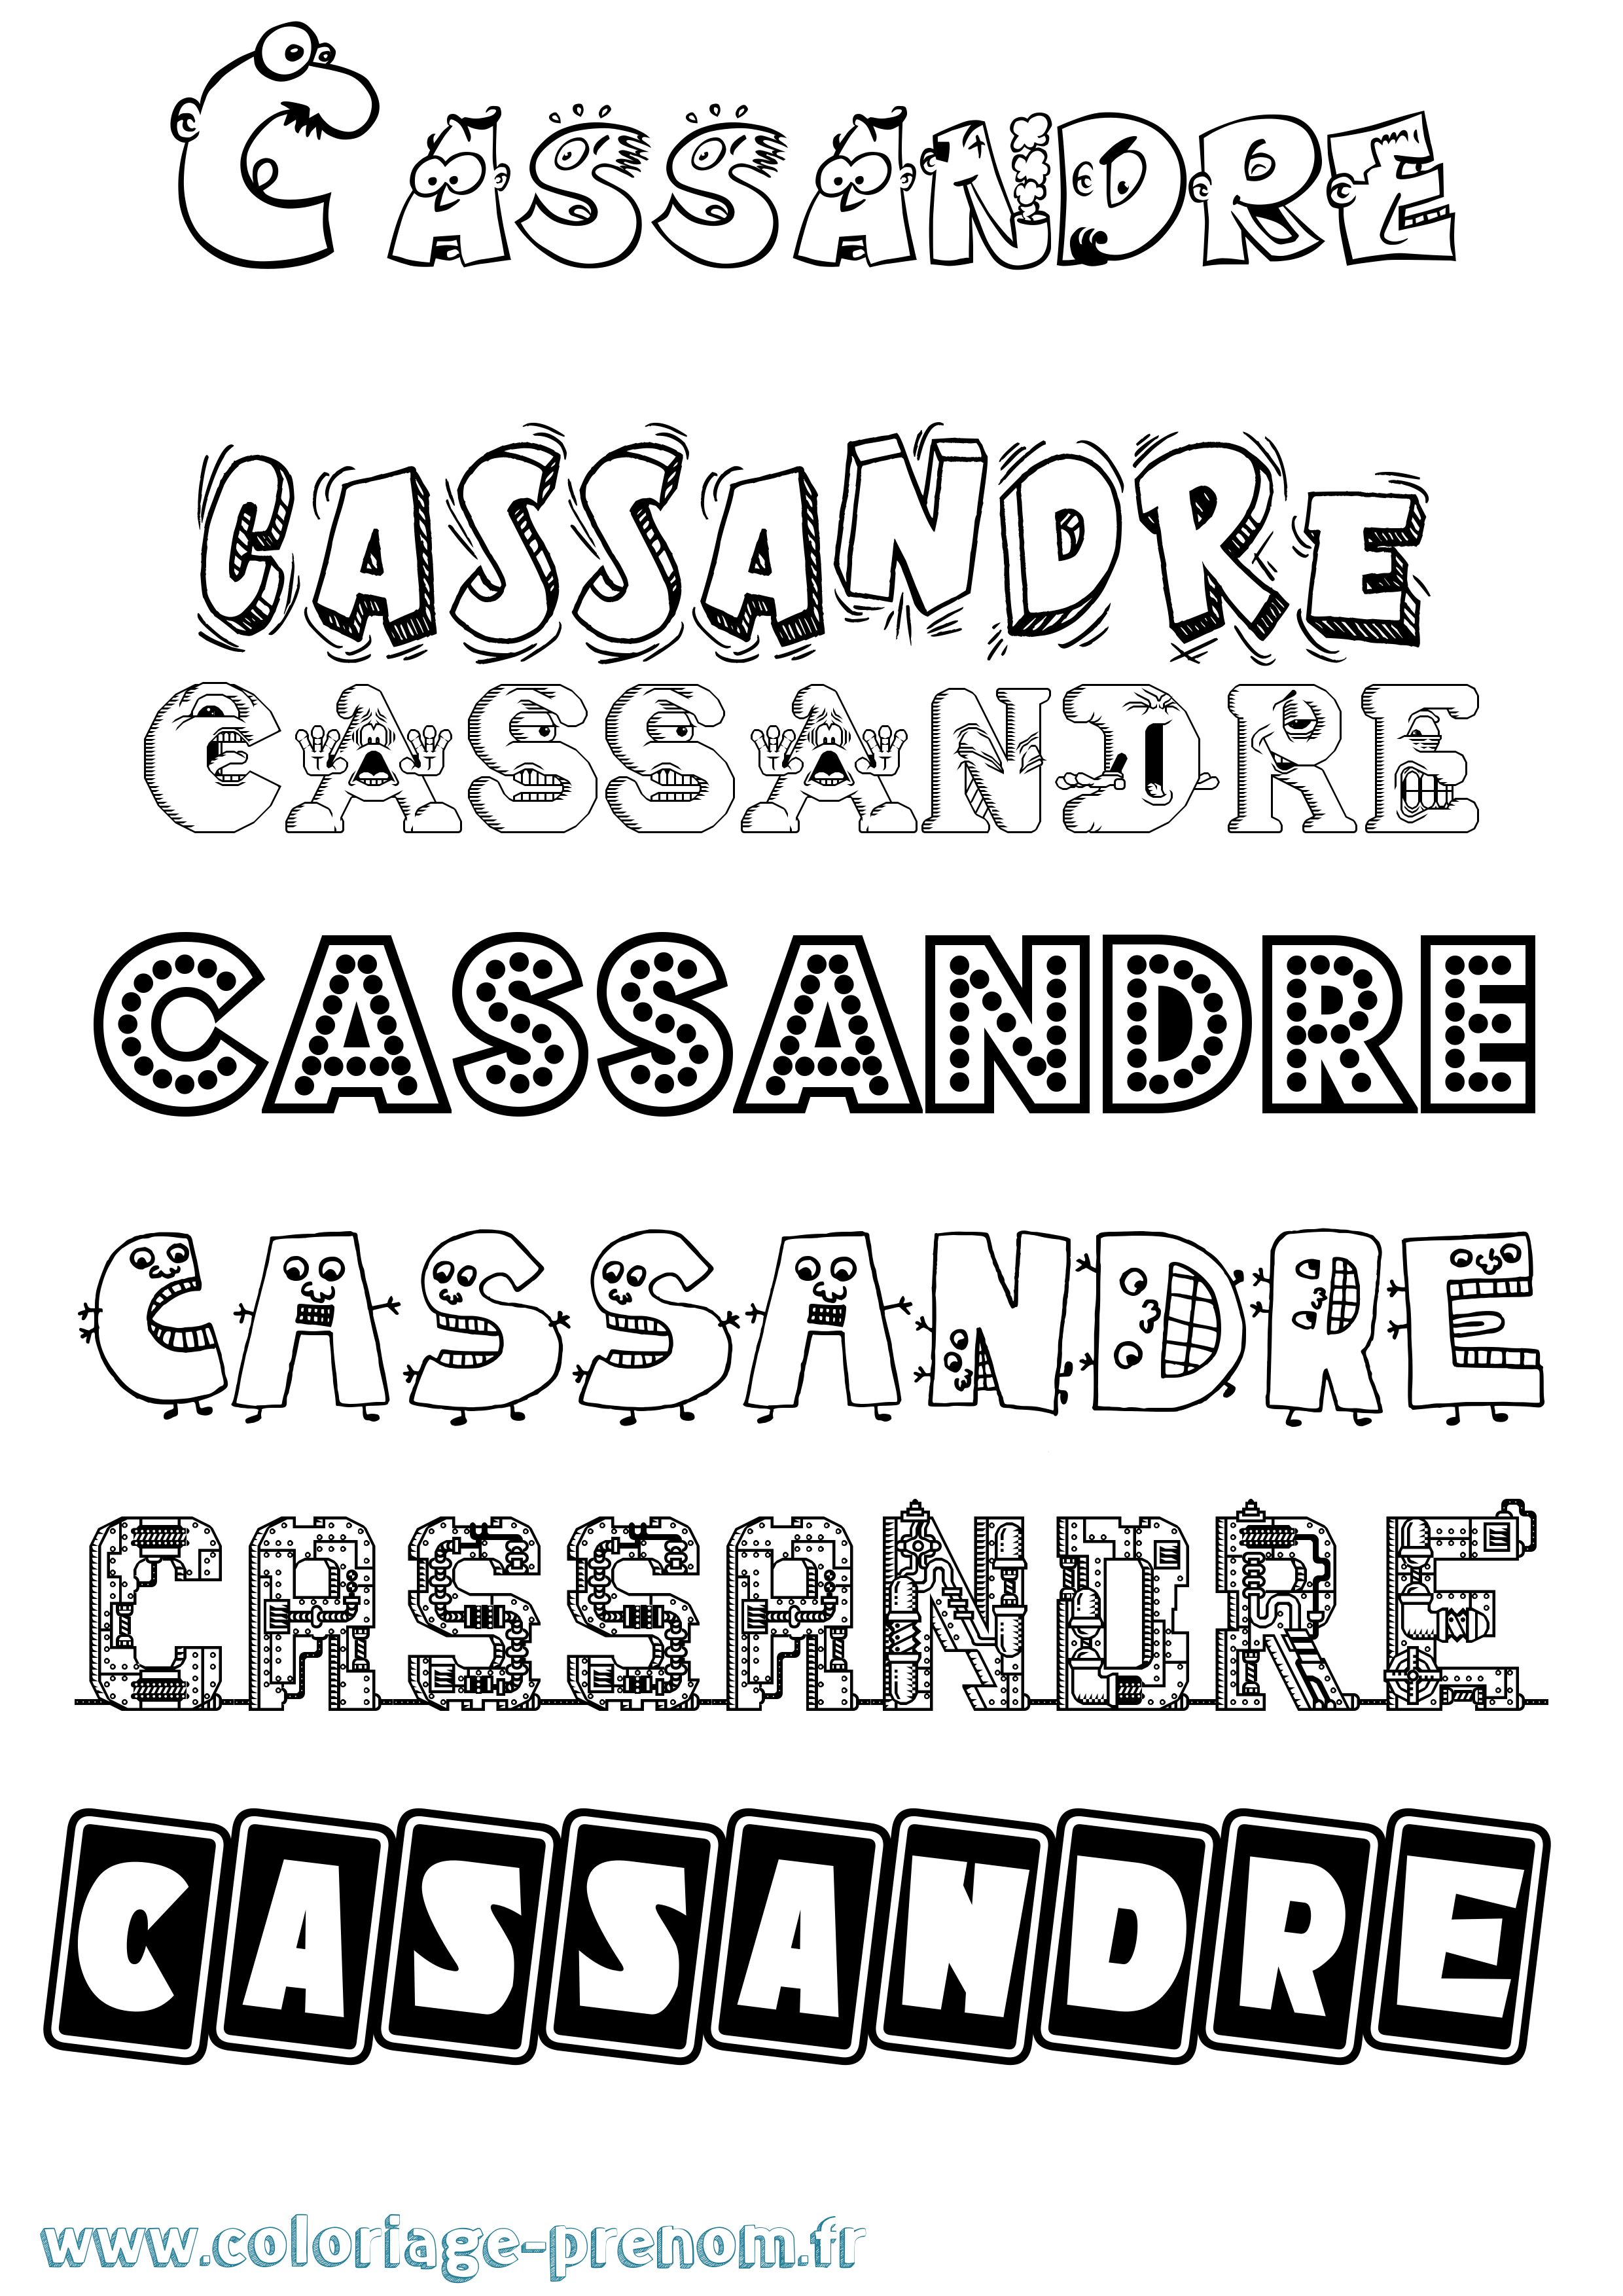 Coloriage prénom Cassandre